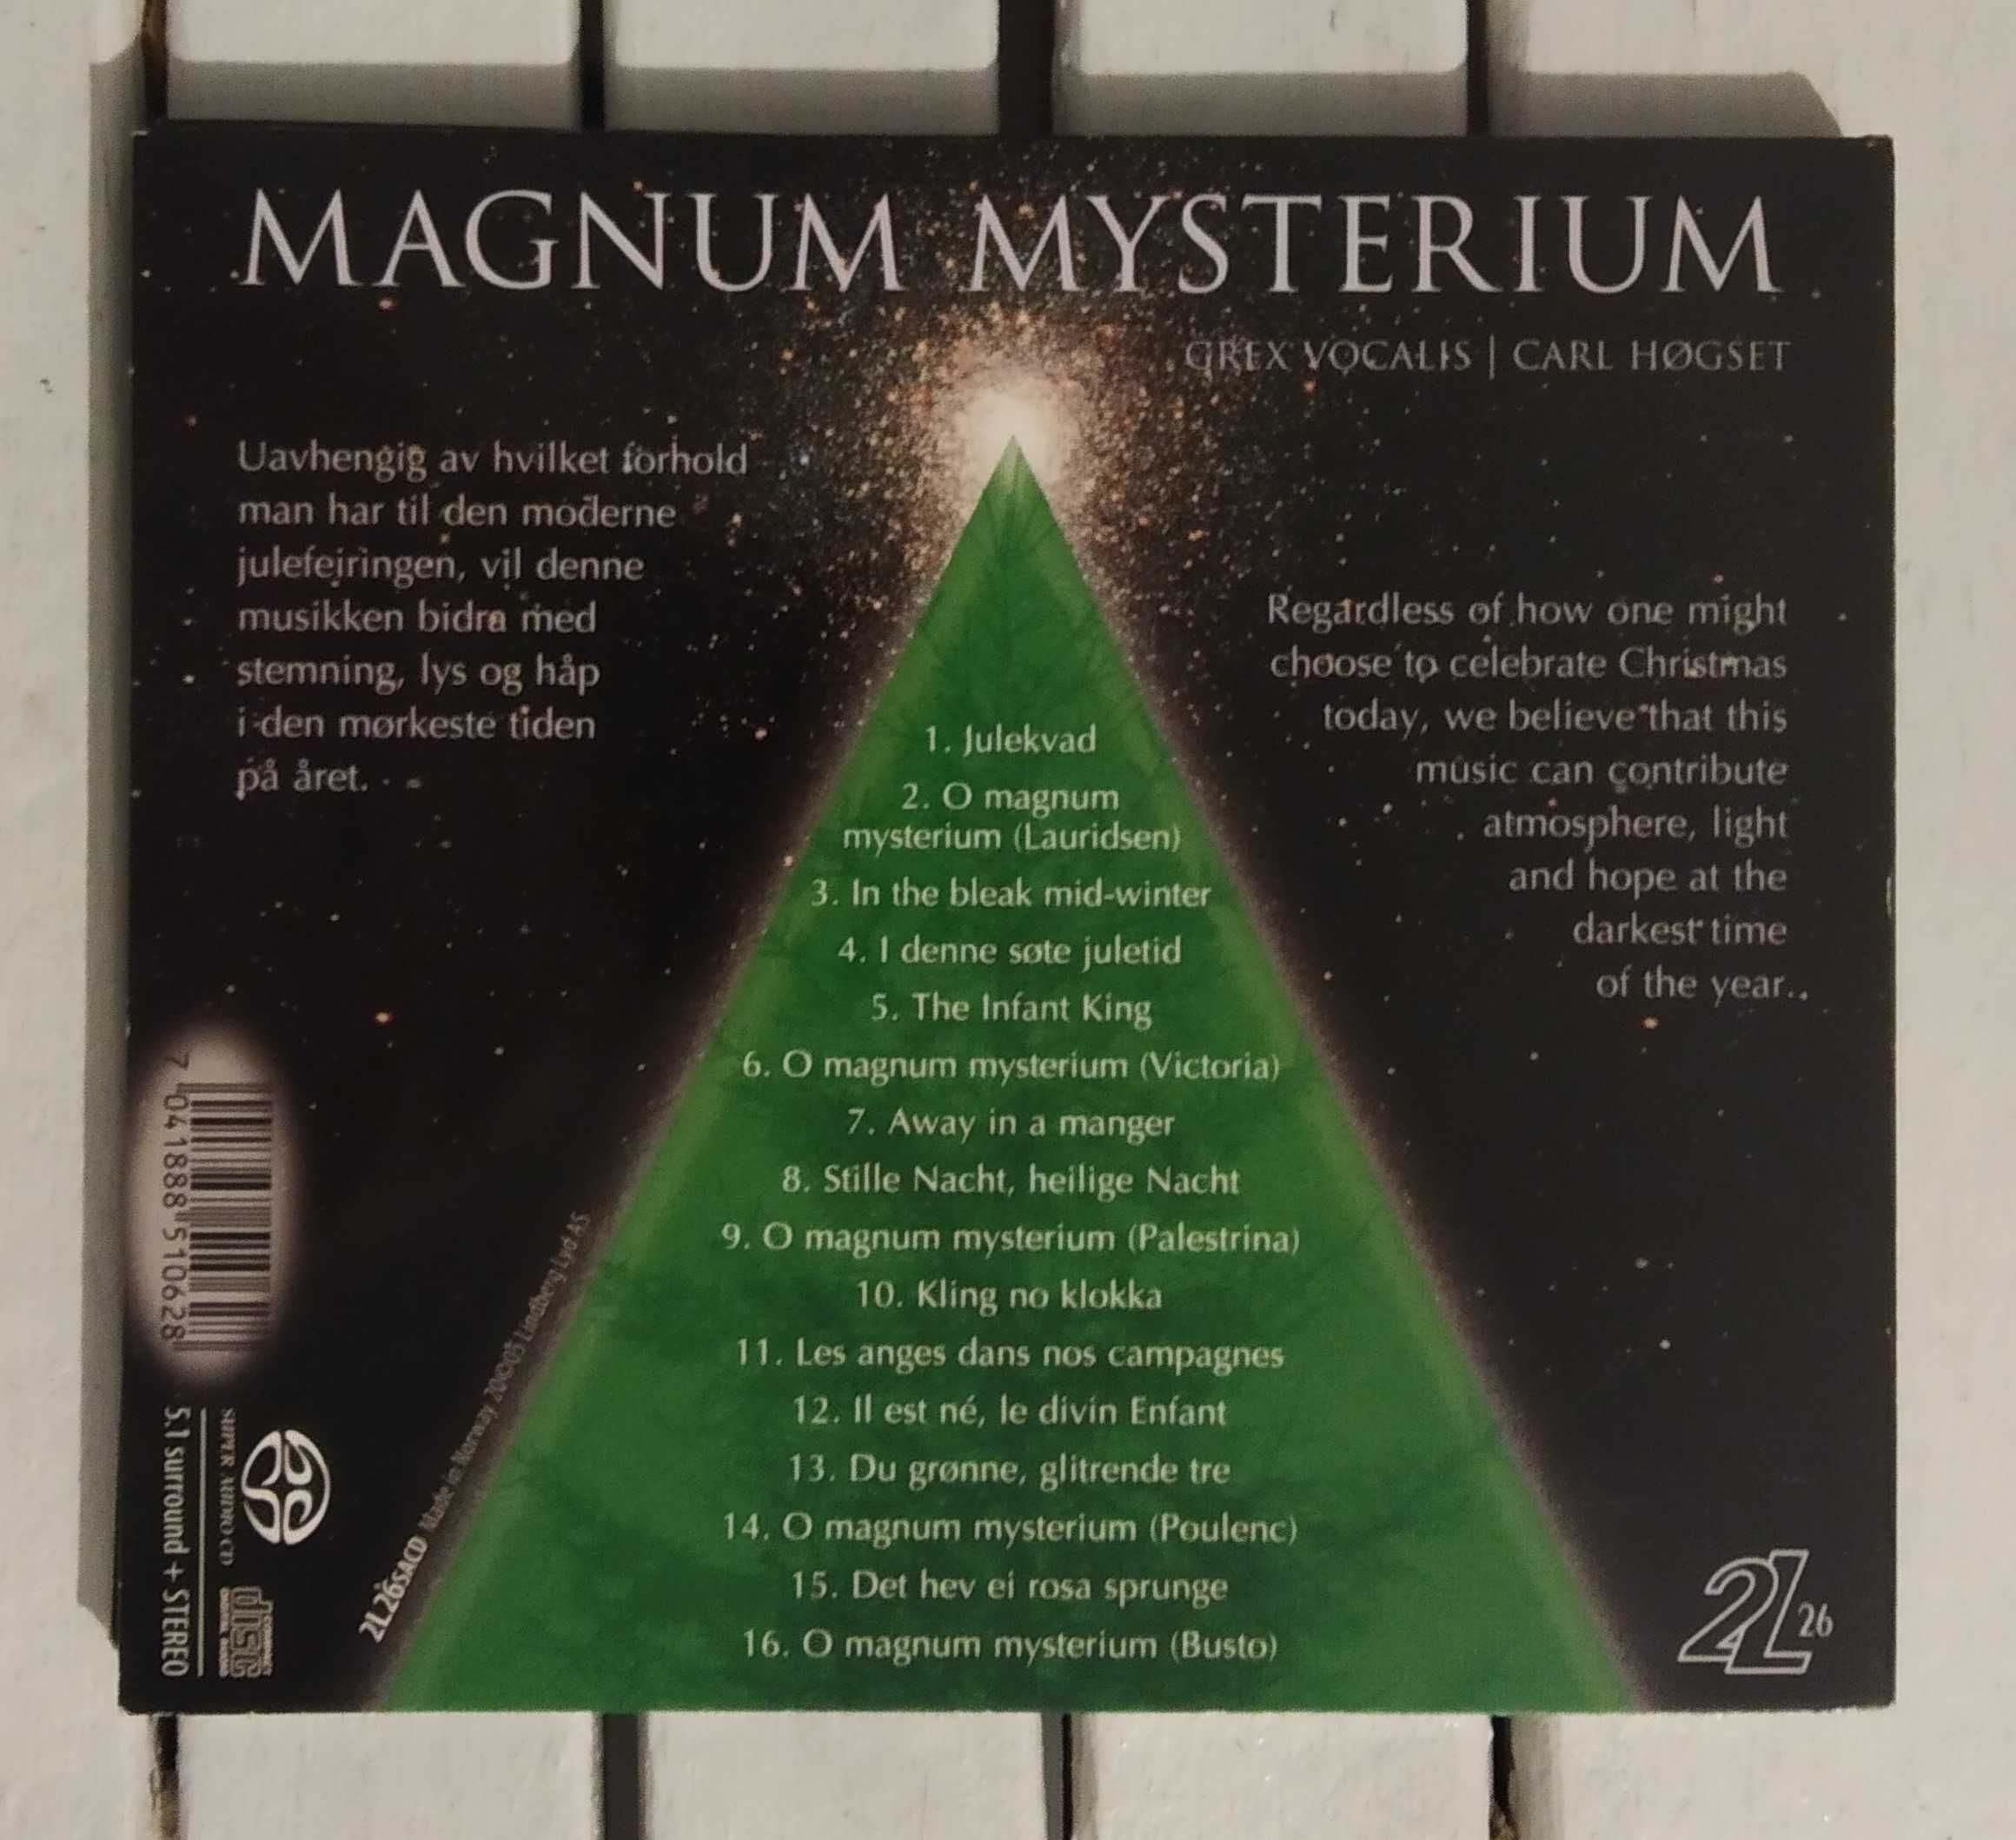 Grex Vocalis, Carl Høgset – Magnum Mysterium (CD) Noruega